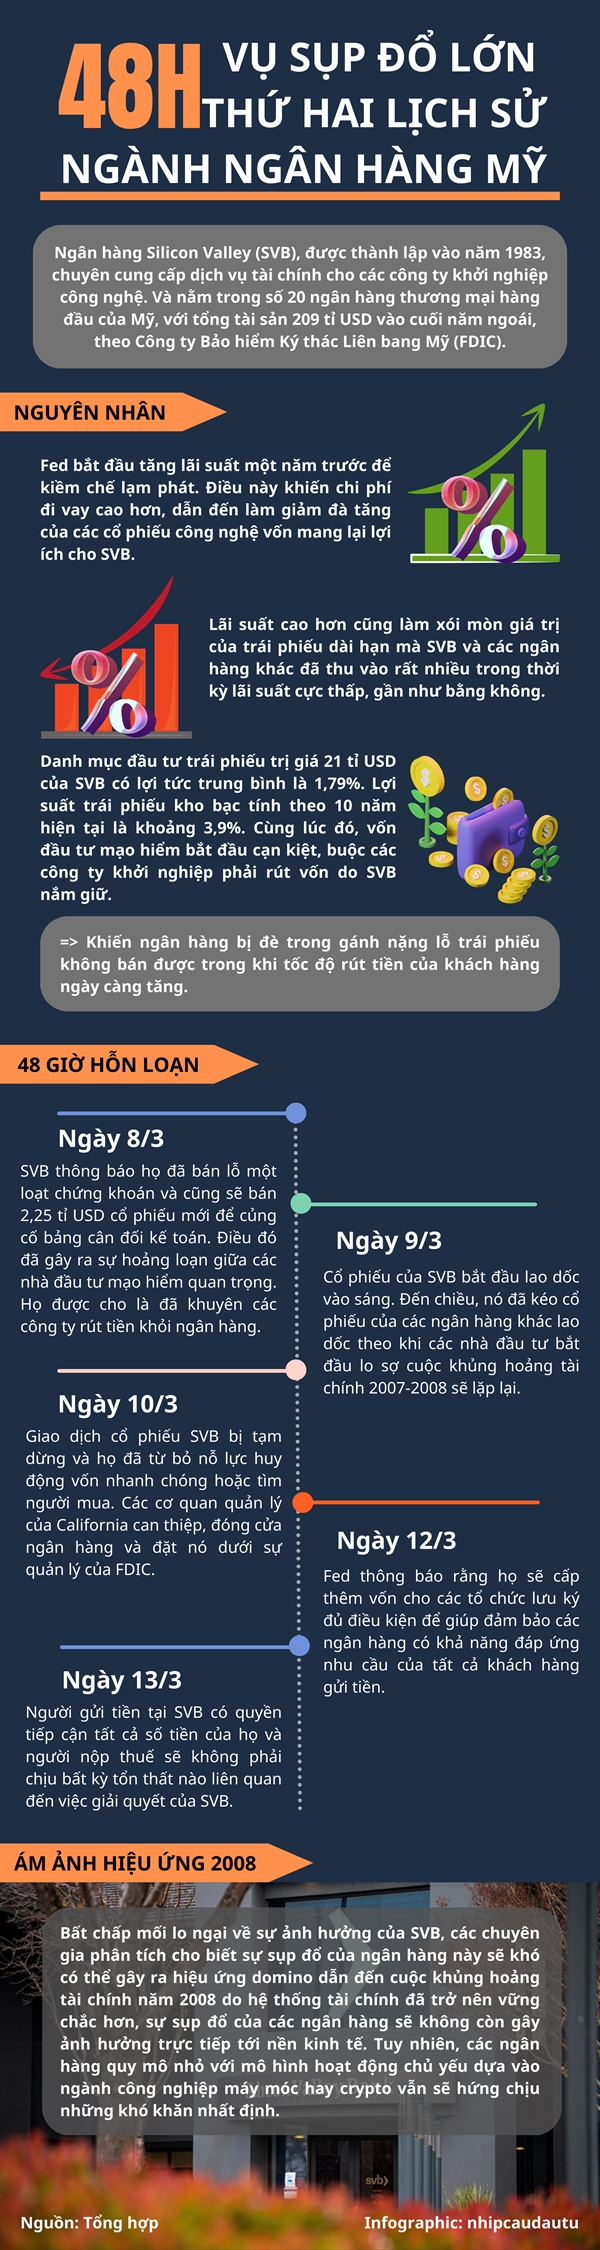 [Infographic] 48 gio cua vu sup do lon thu 2 lich su nganh ngan hang My